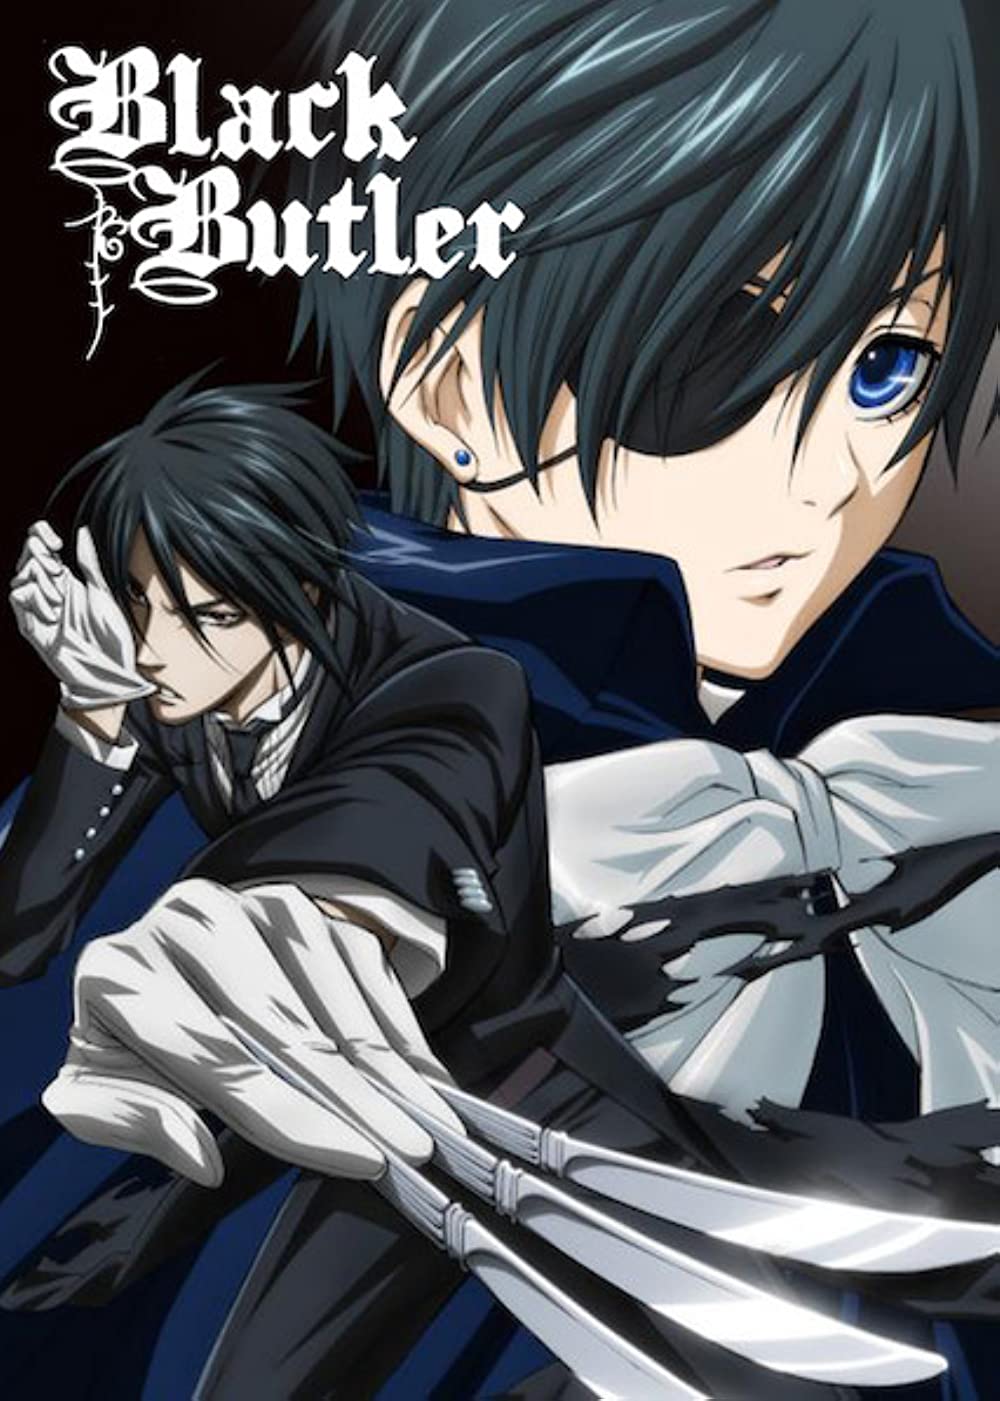 black butler characters names season 2